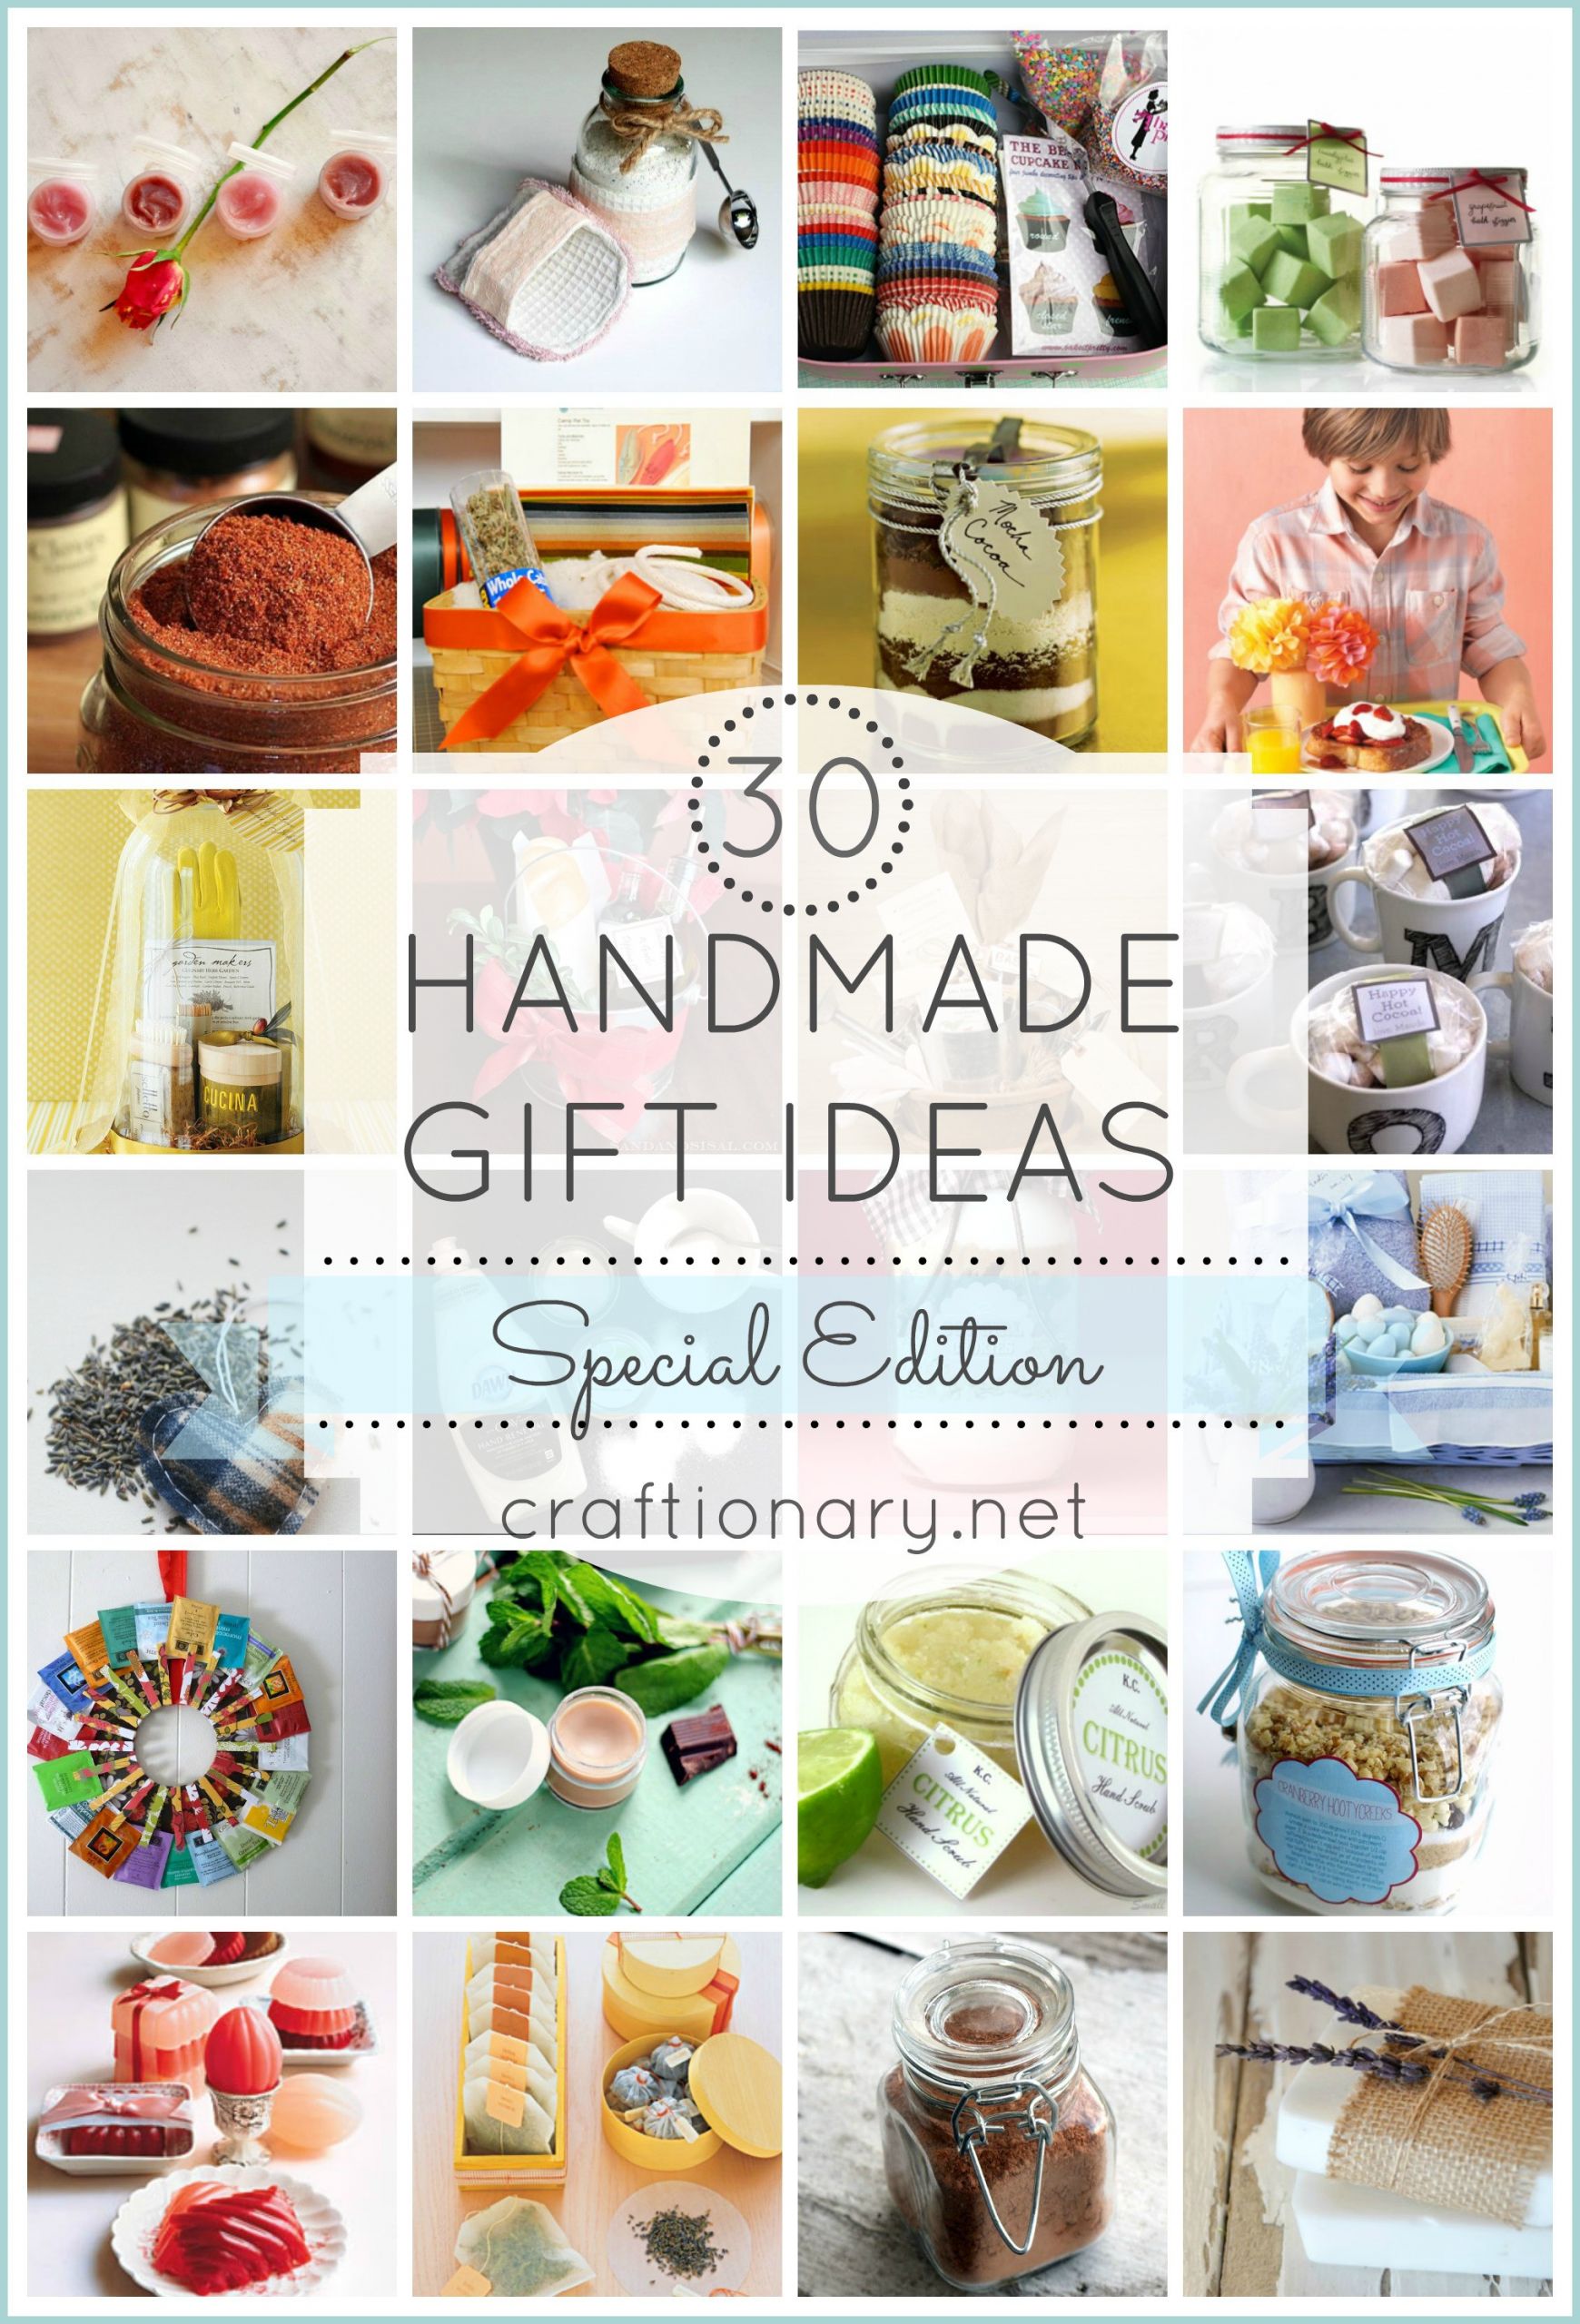 20 Of the Best Ideas for Handmade Birthday Gift Ideas Home, Family